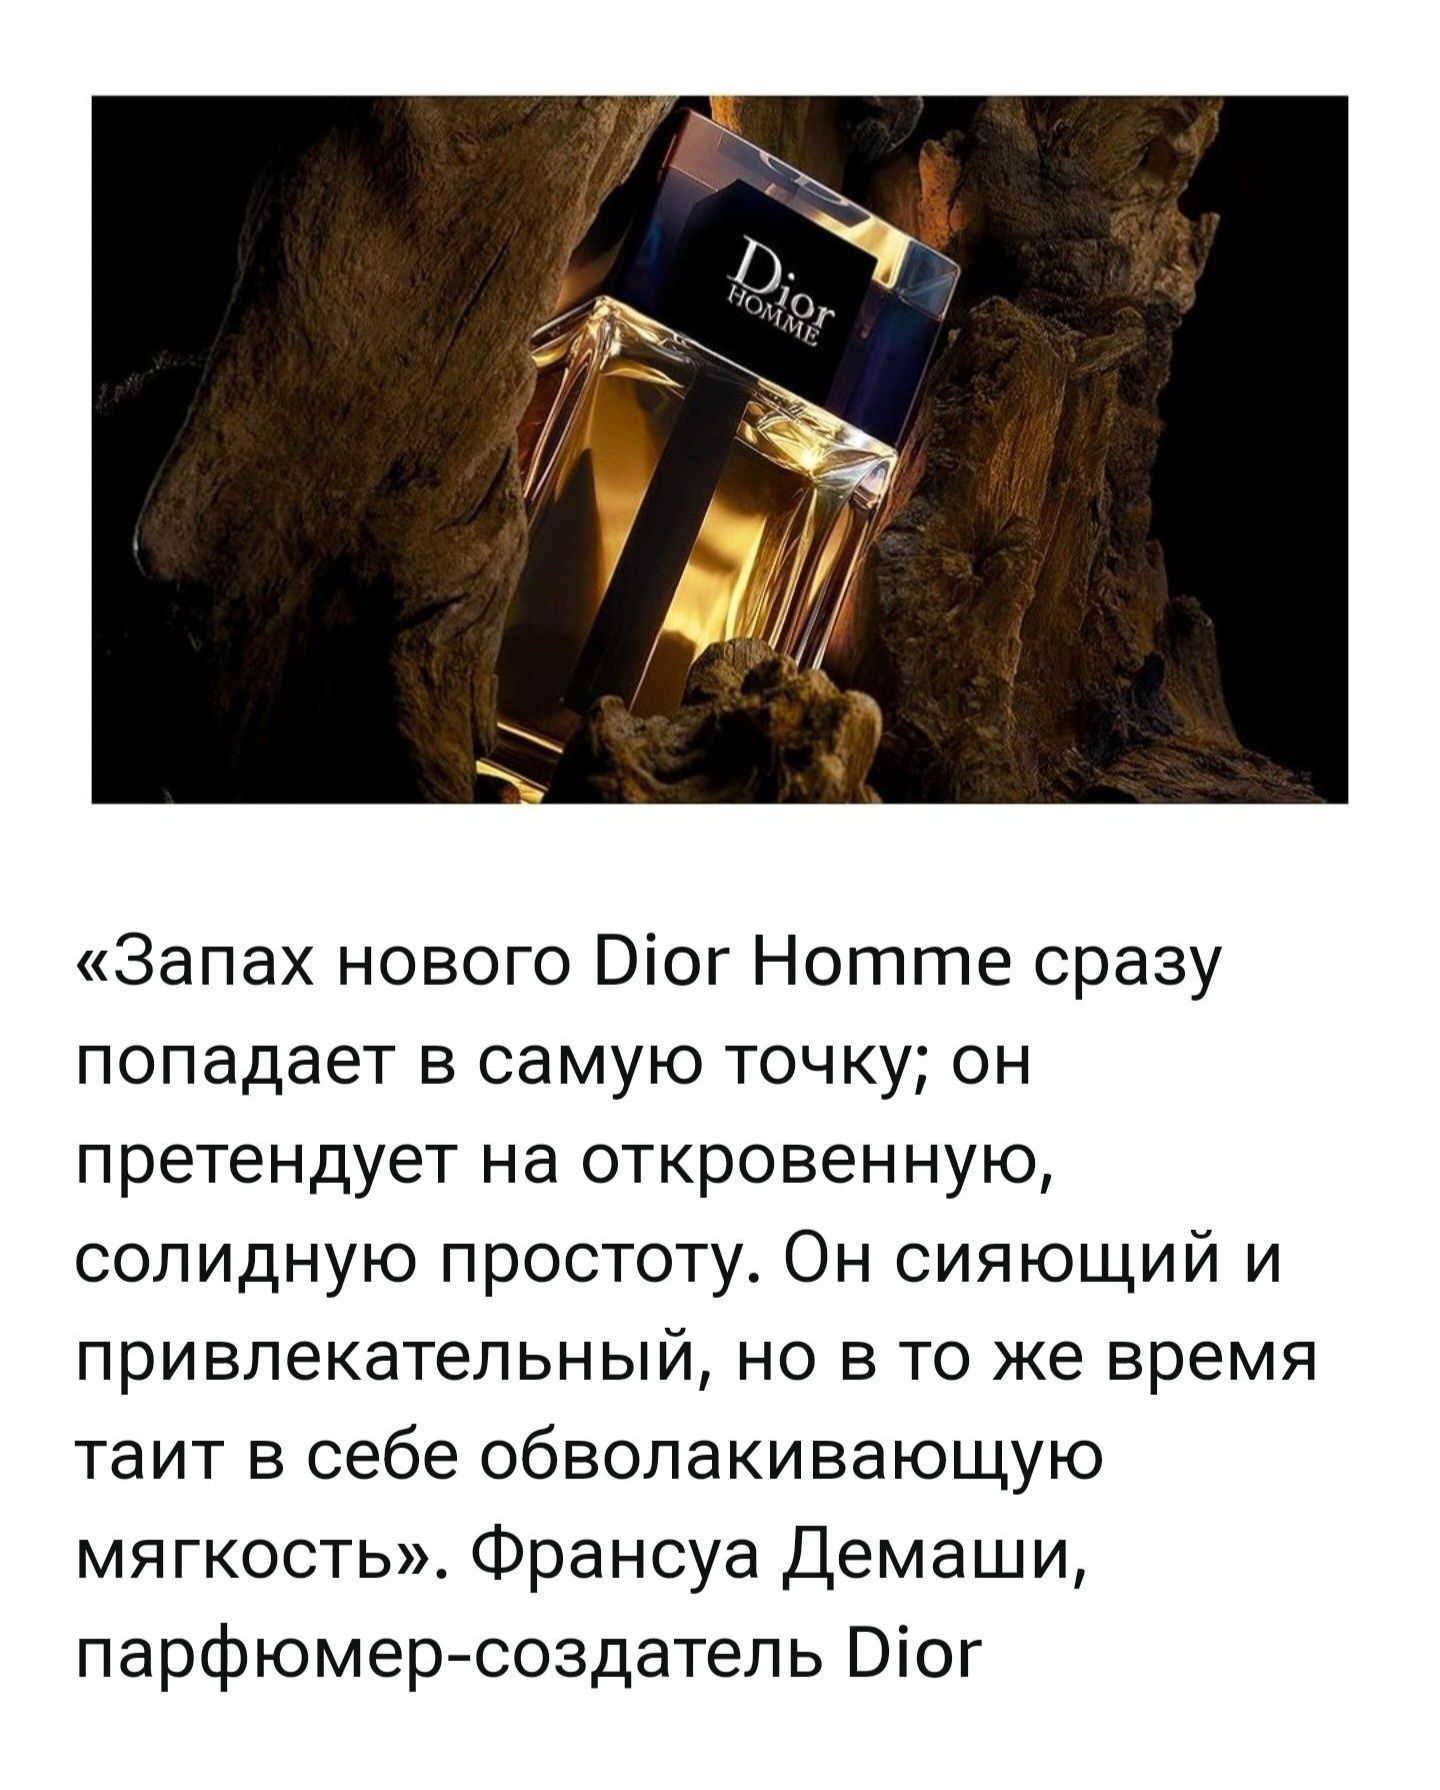 Продаётся Christian Dior Homme 100ml. ORIGINAL